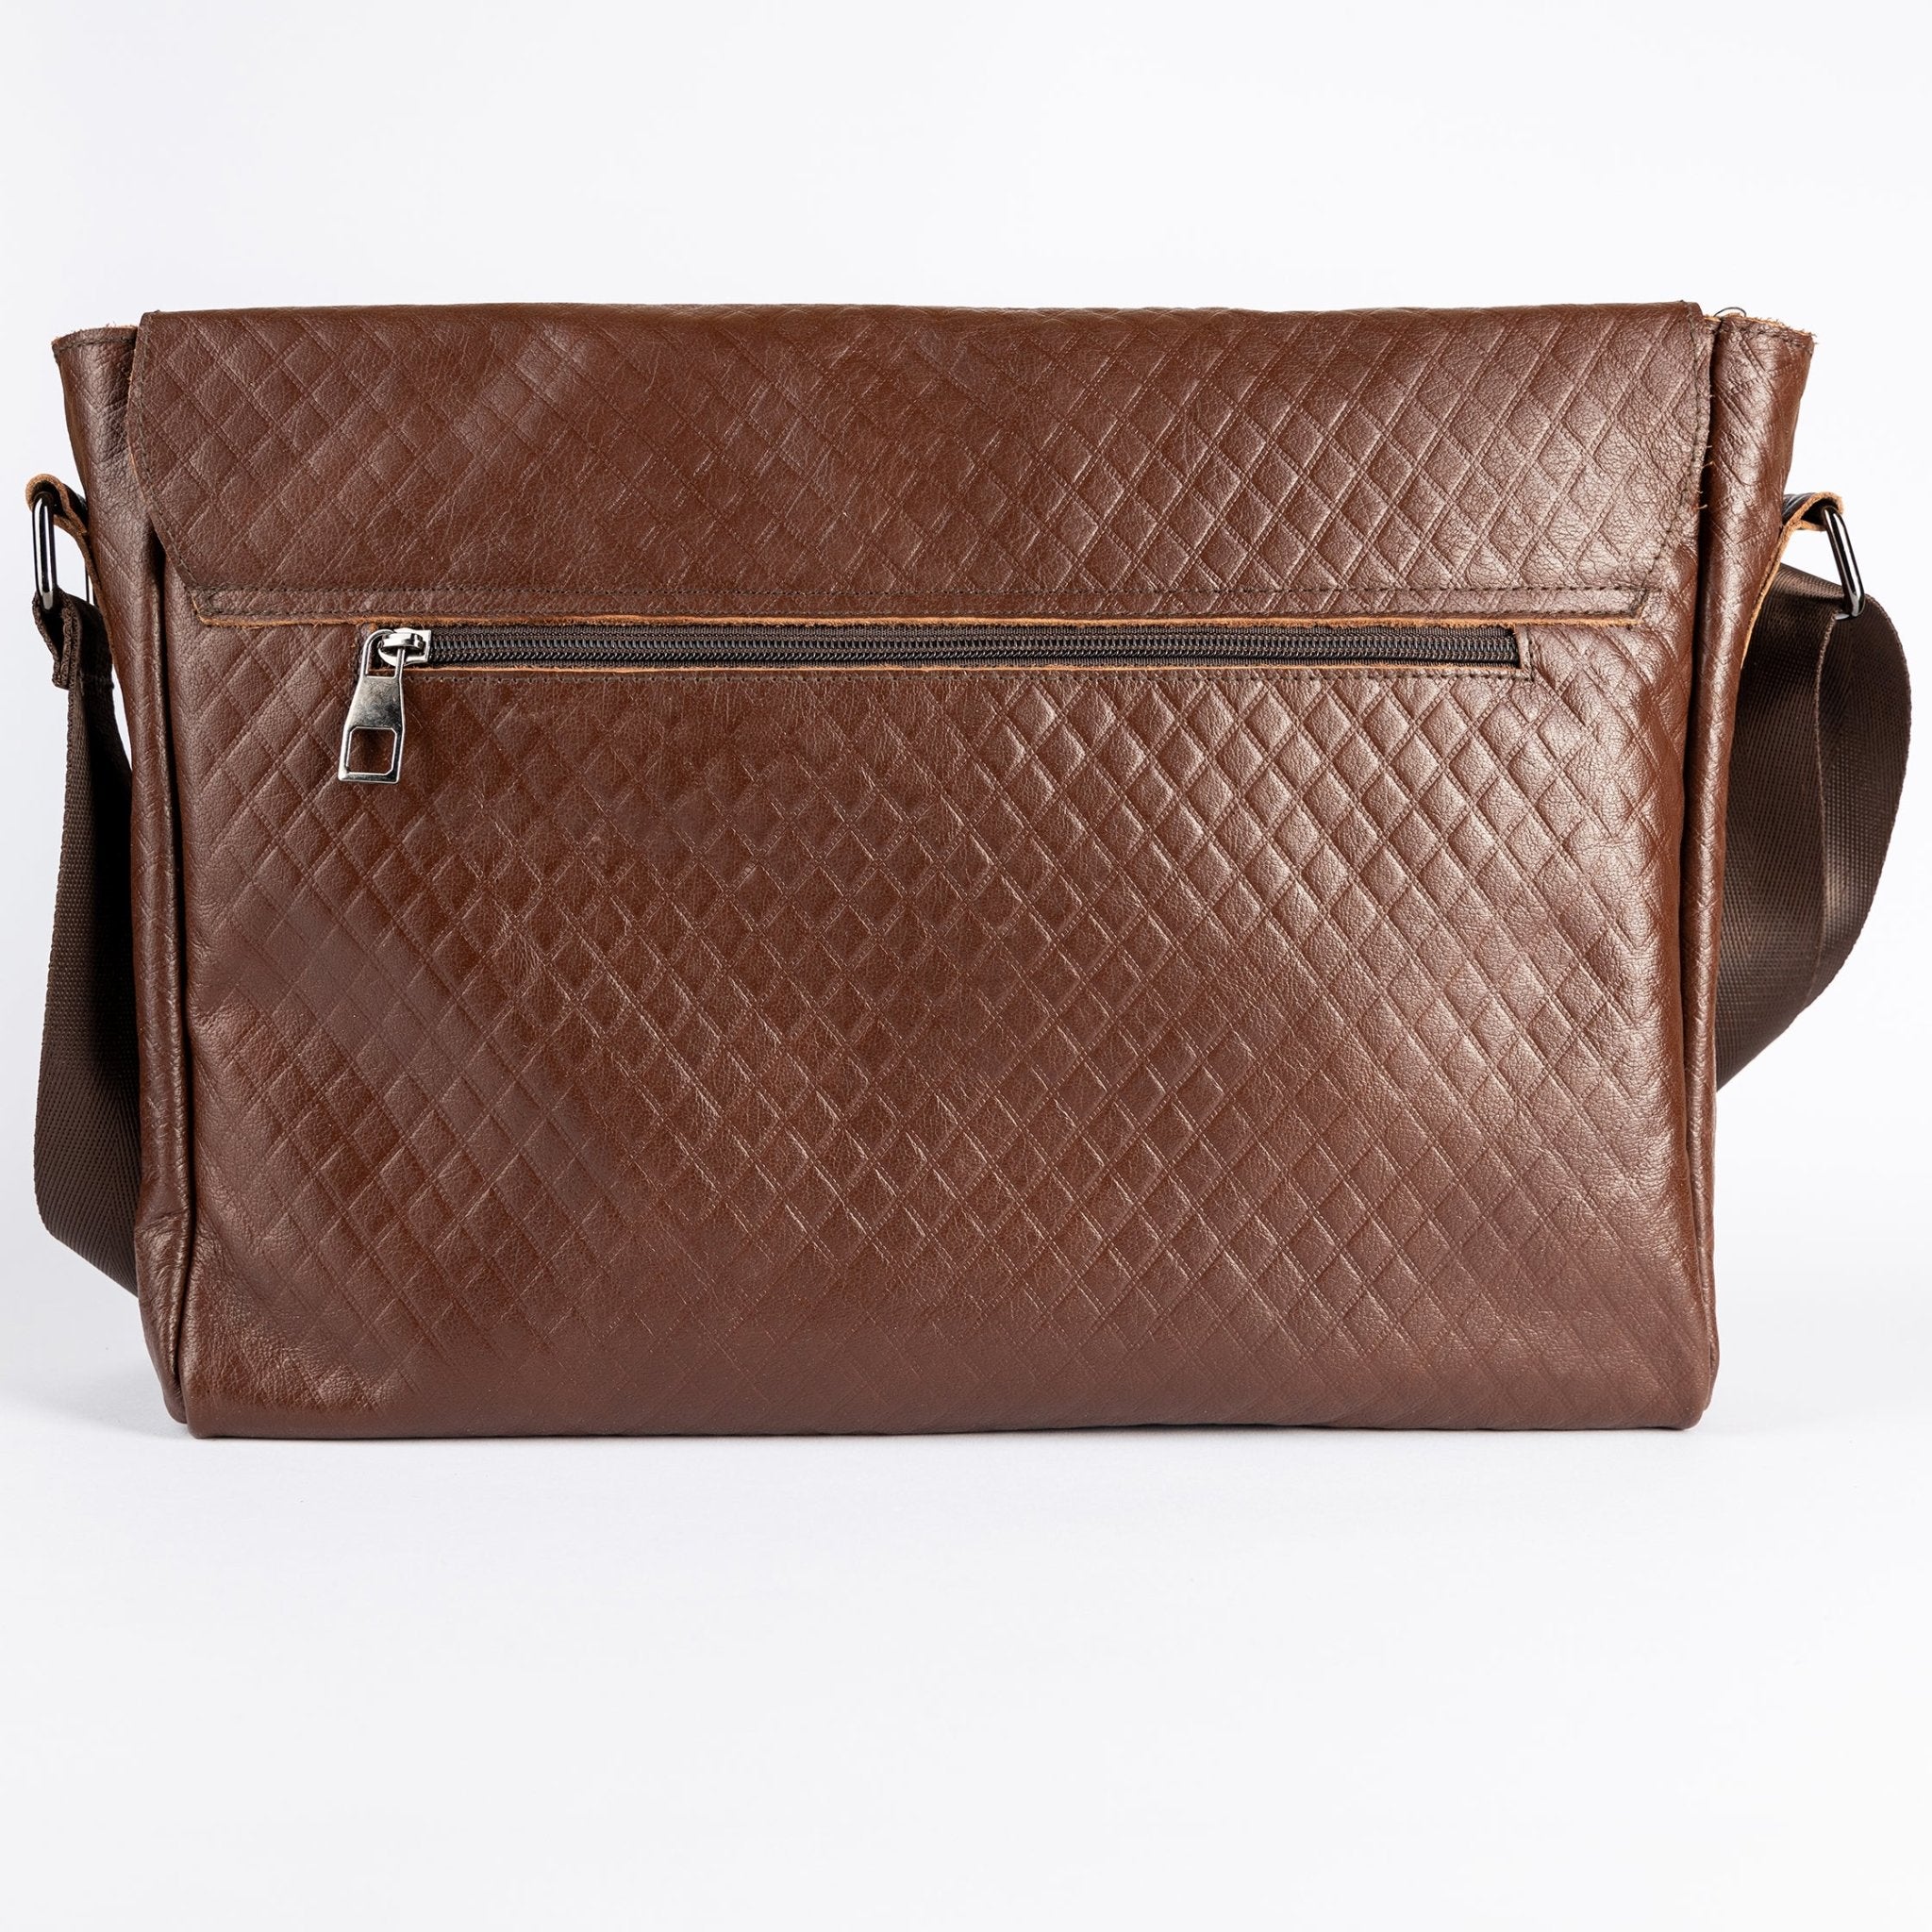 Leather Everyday bag - Espresso - Hatchill